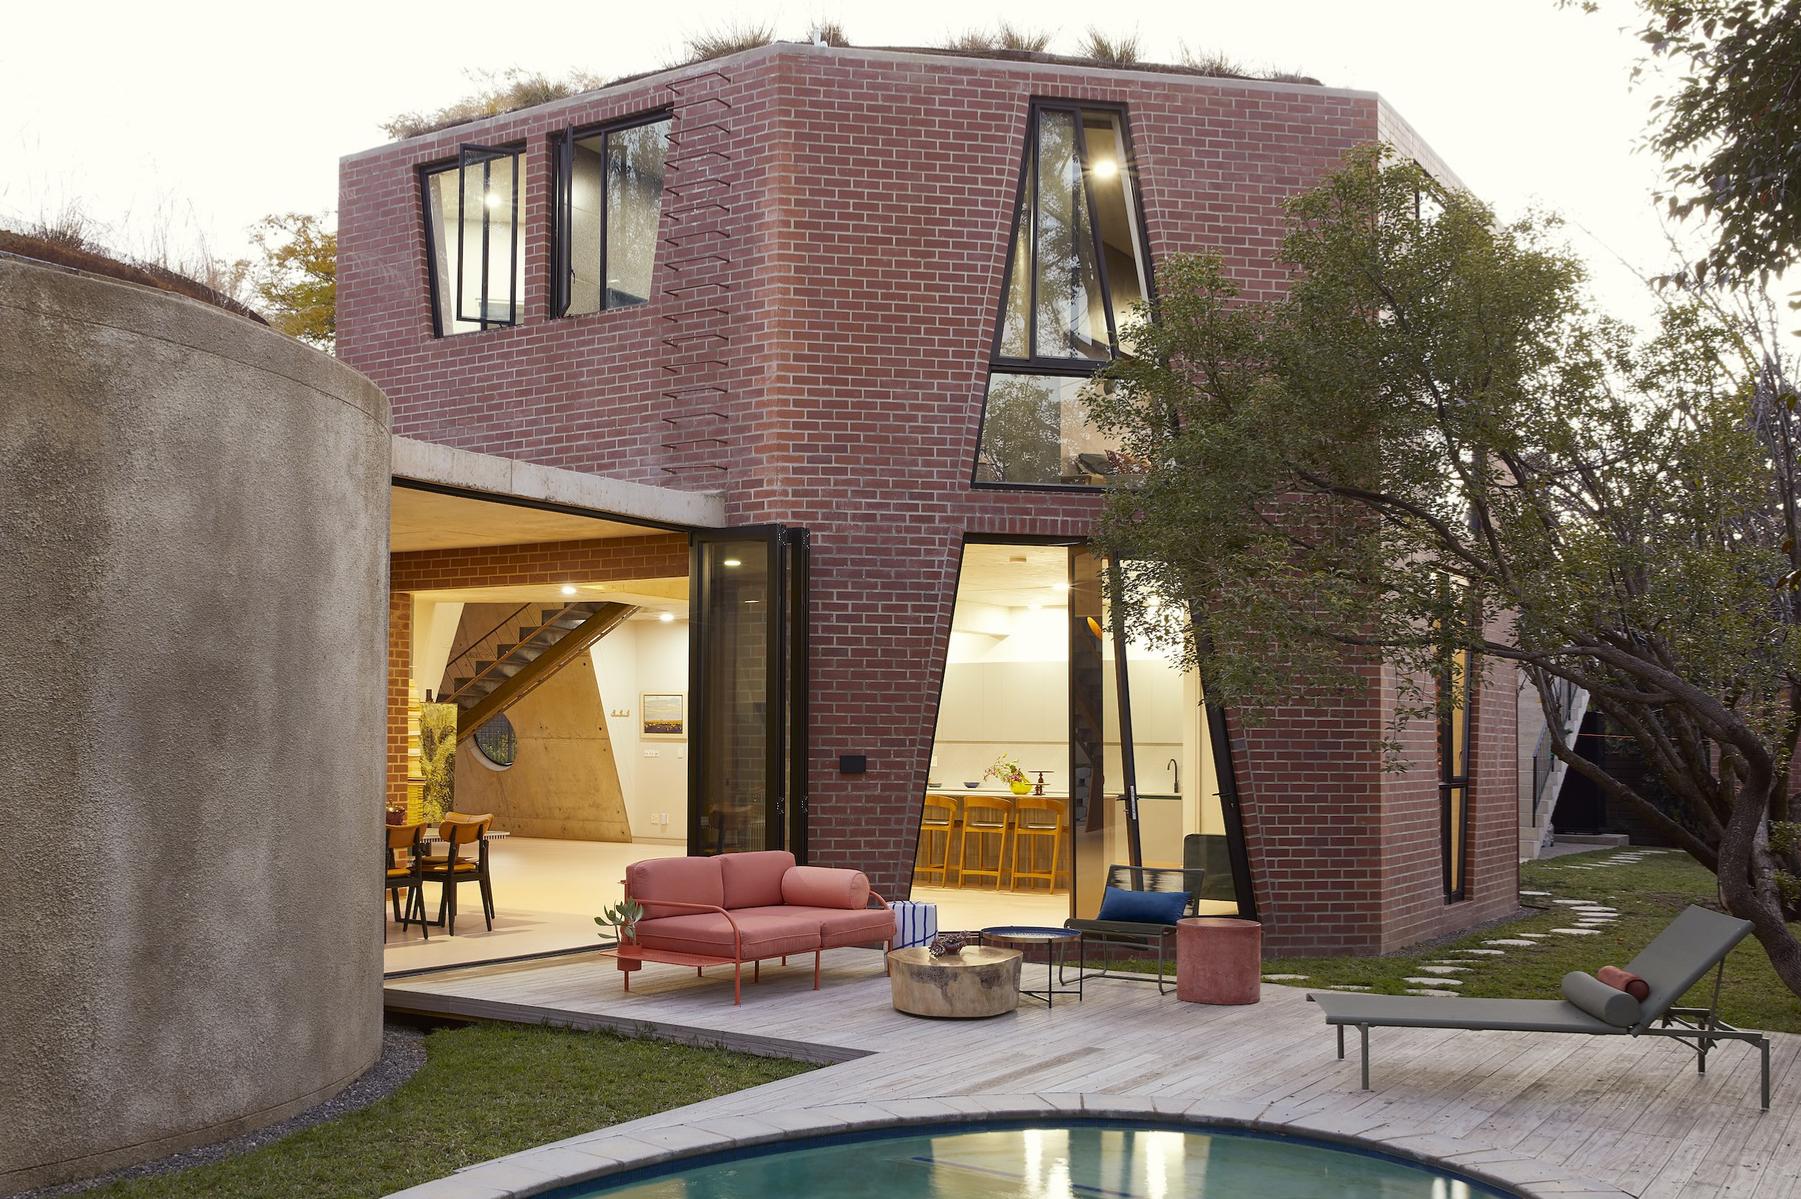 Ten homes with weird and wonderful custom-shaped windows